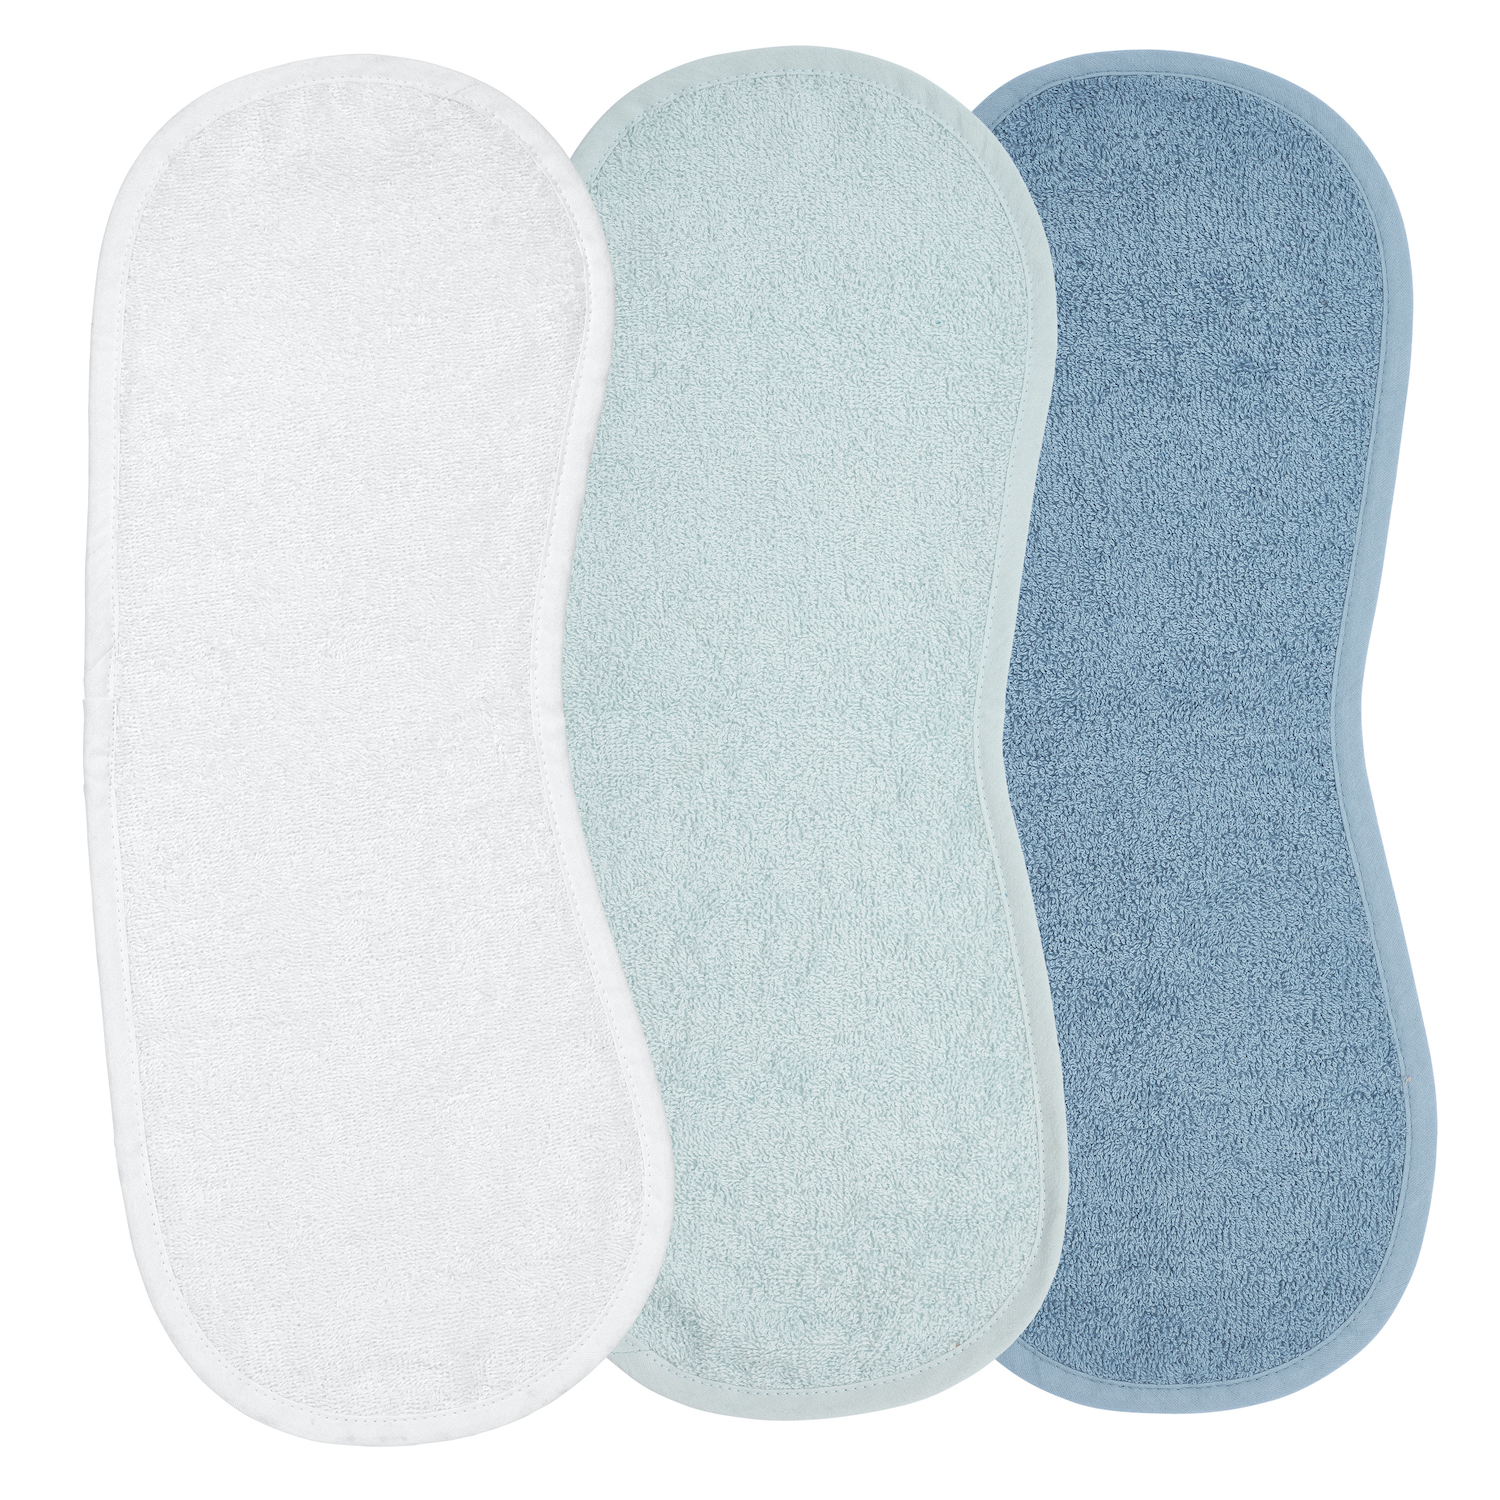 Burb cloth 3-pack terry Uni - white/light blue/denim - 53x20cm